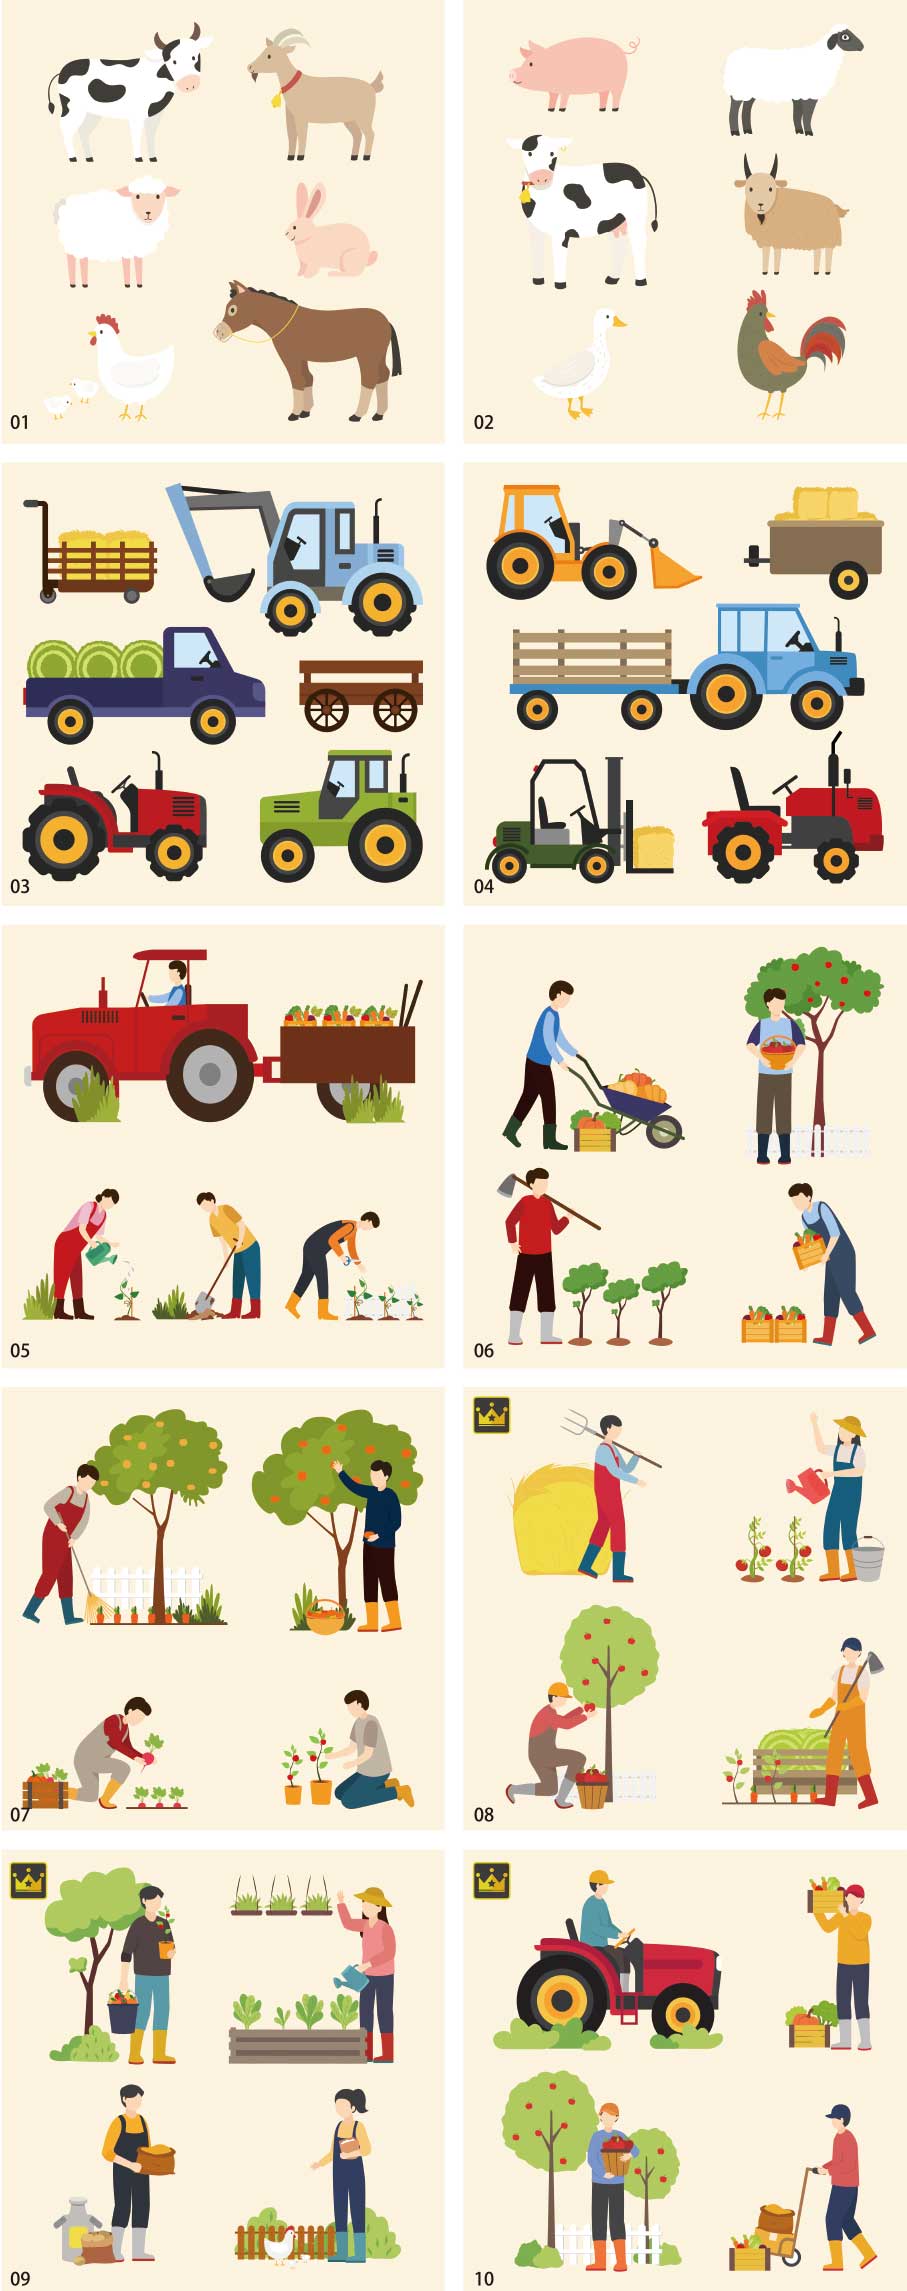 Farm illustration collection